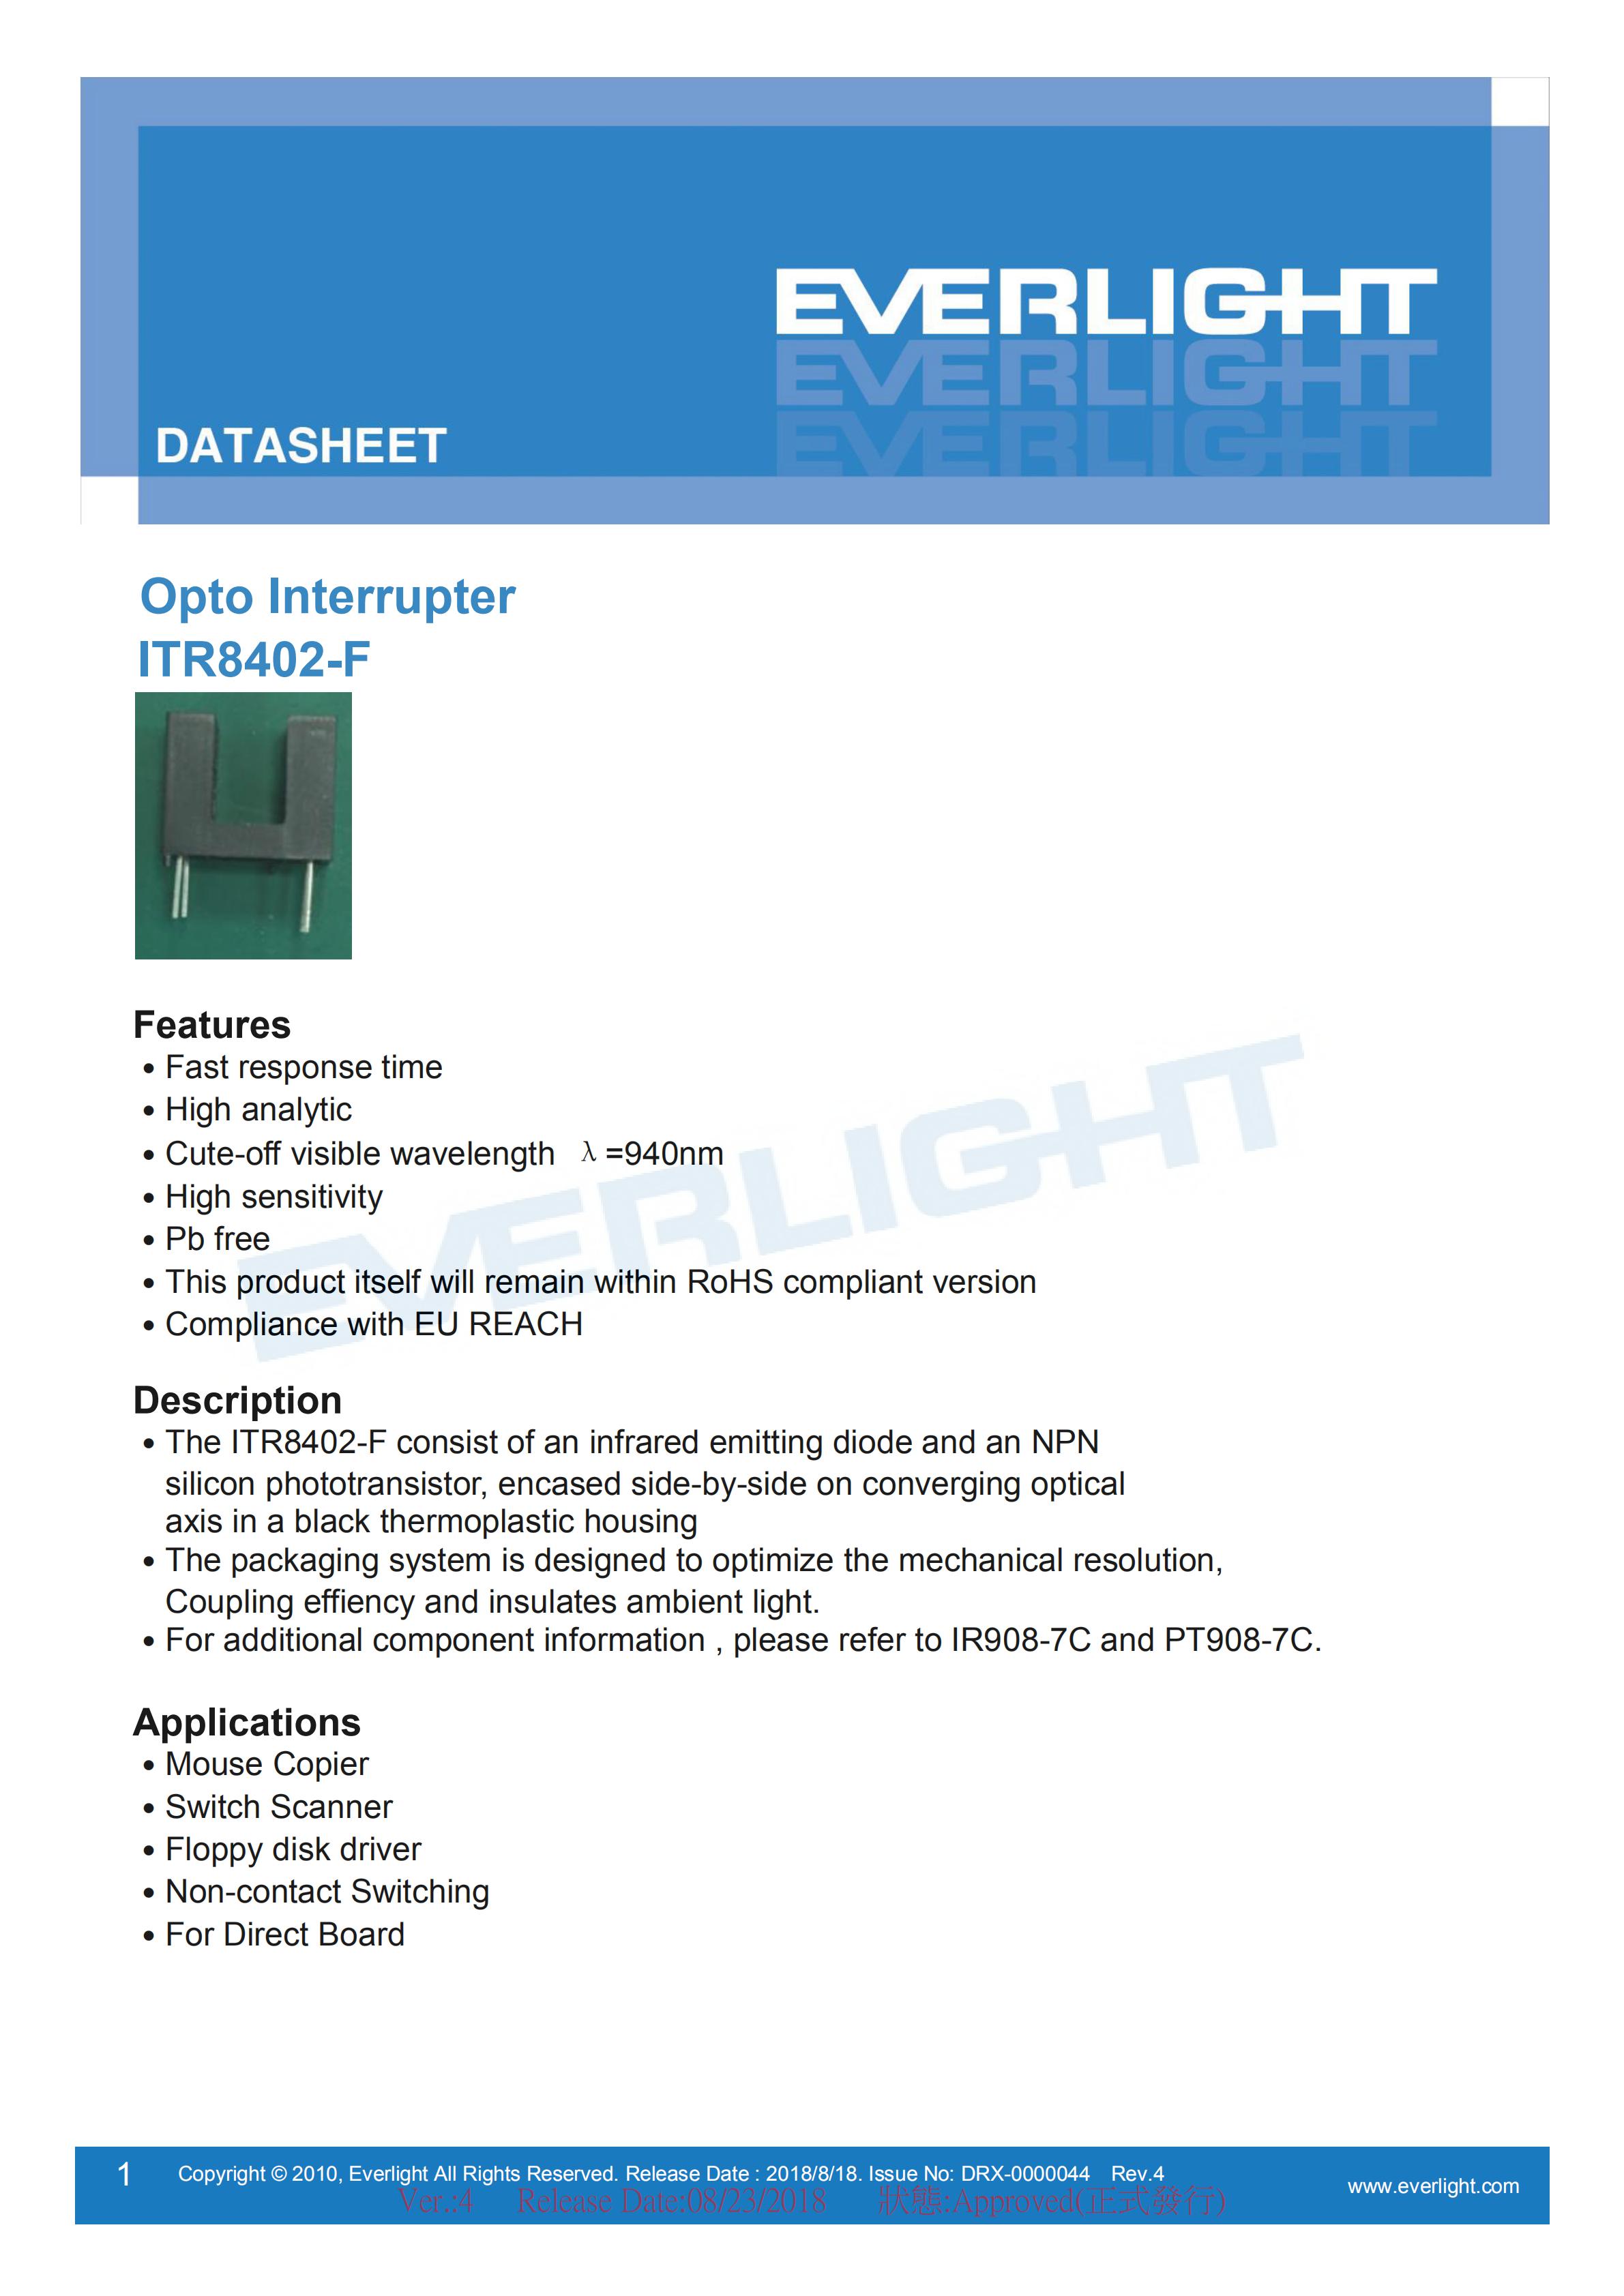 EVERLIGHT Optical Switch ITR8402-F Opto Interrupter Datasheet